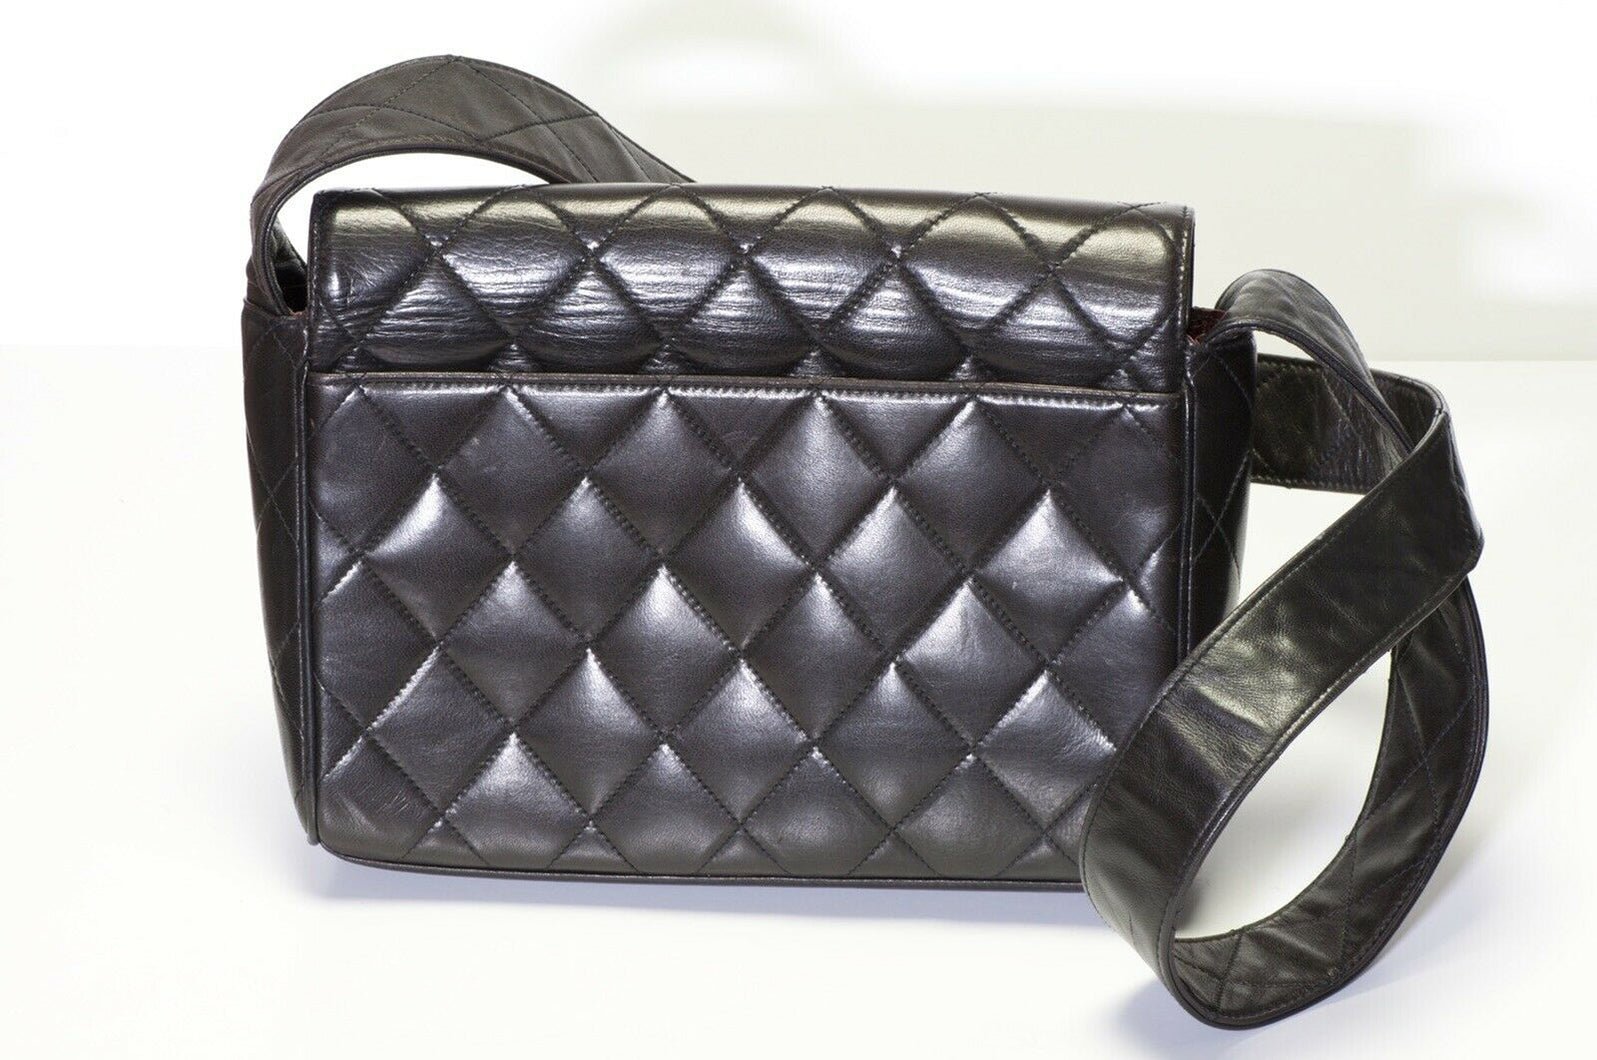 Vintage CHANEL Paris Brown Quilted Leather CC Flap Shoulder Bag